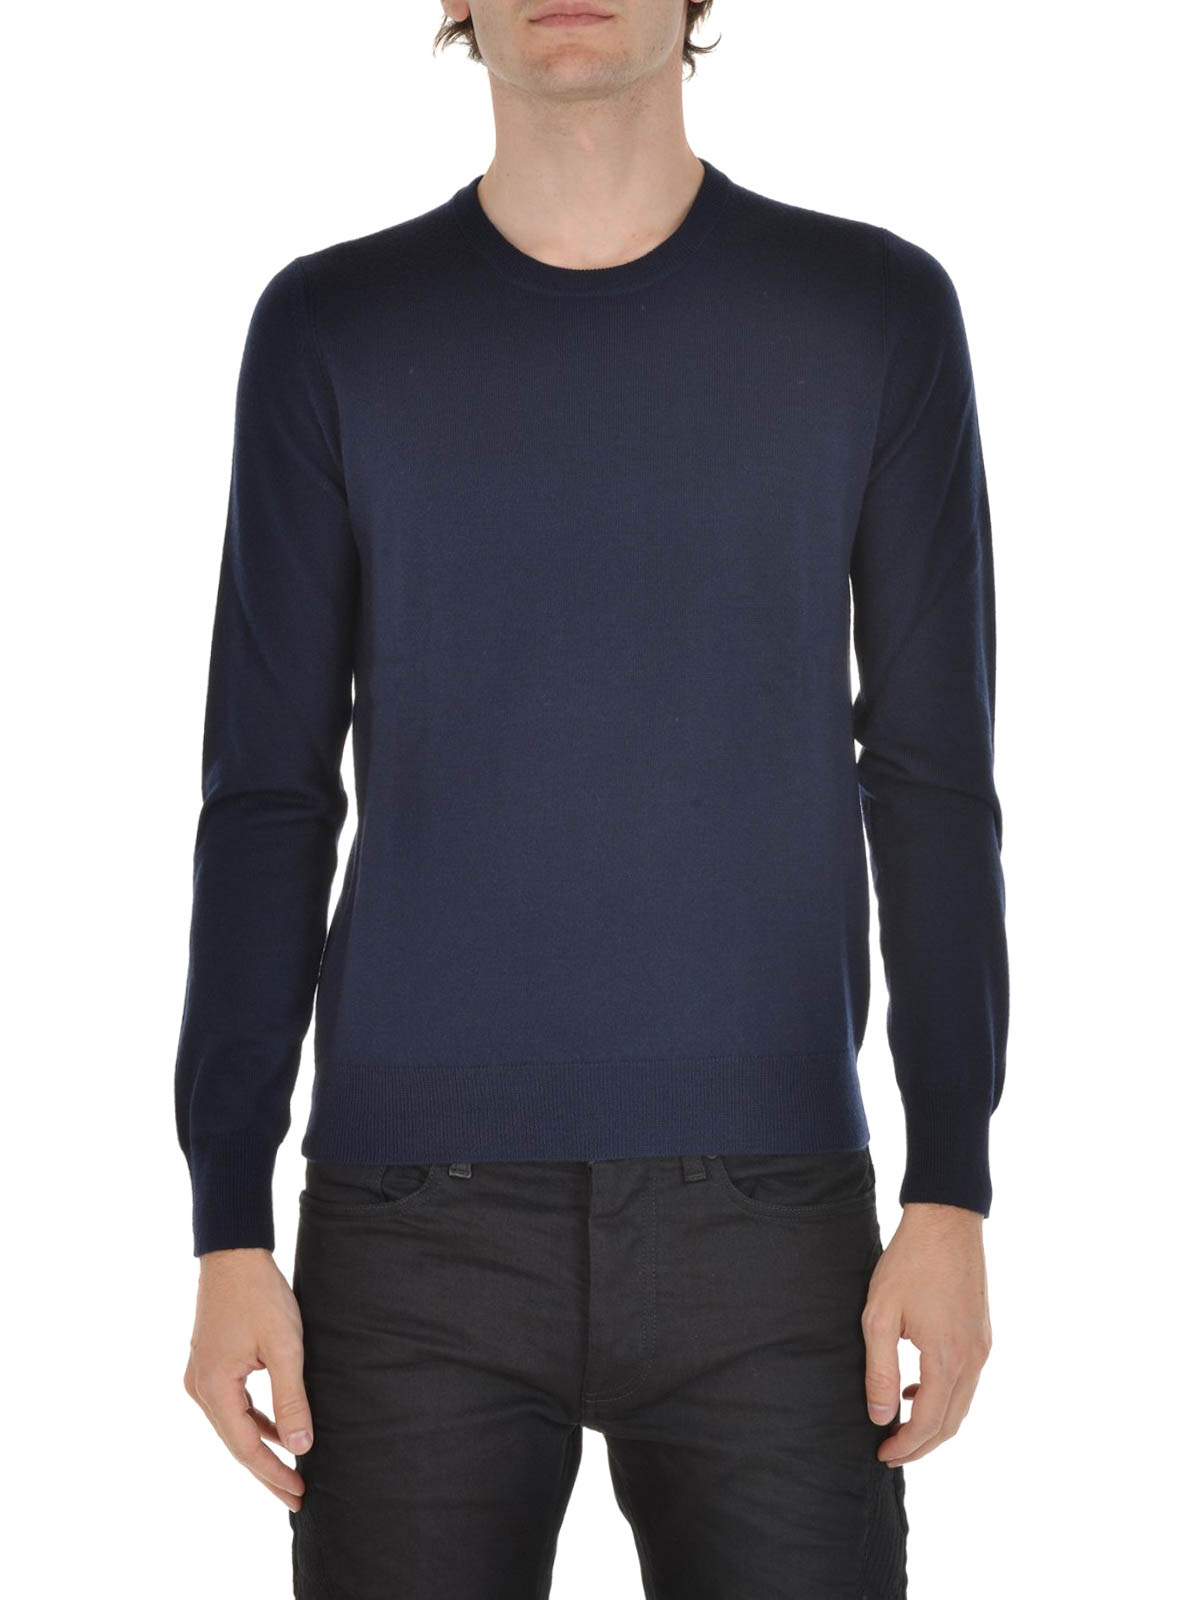 Burberry - Merino wool sweater - crew necks - | Shop online at iKRIX